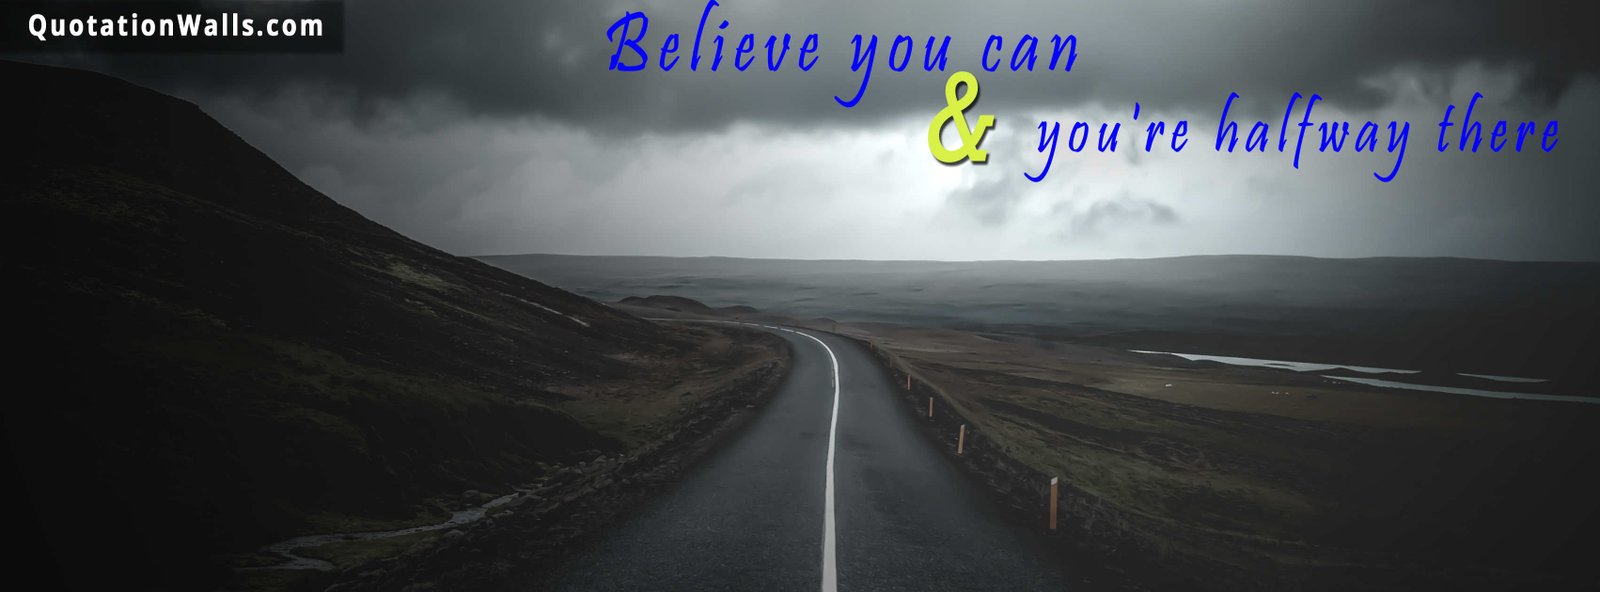 Believe Motivational Facebook Cover Photo - QuotationWalls